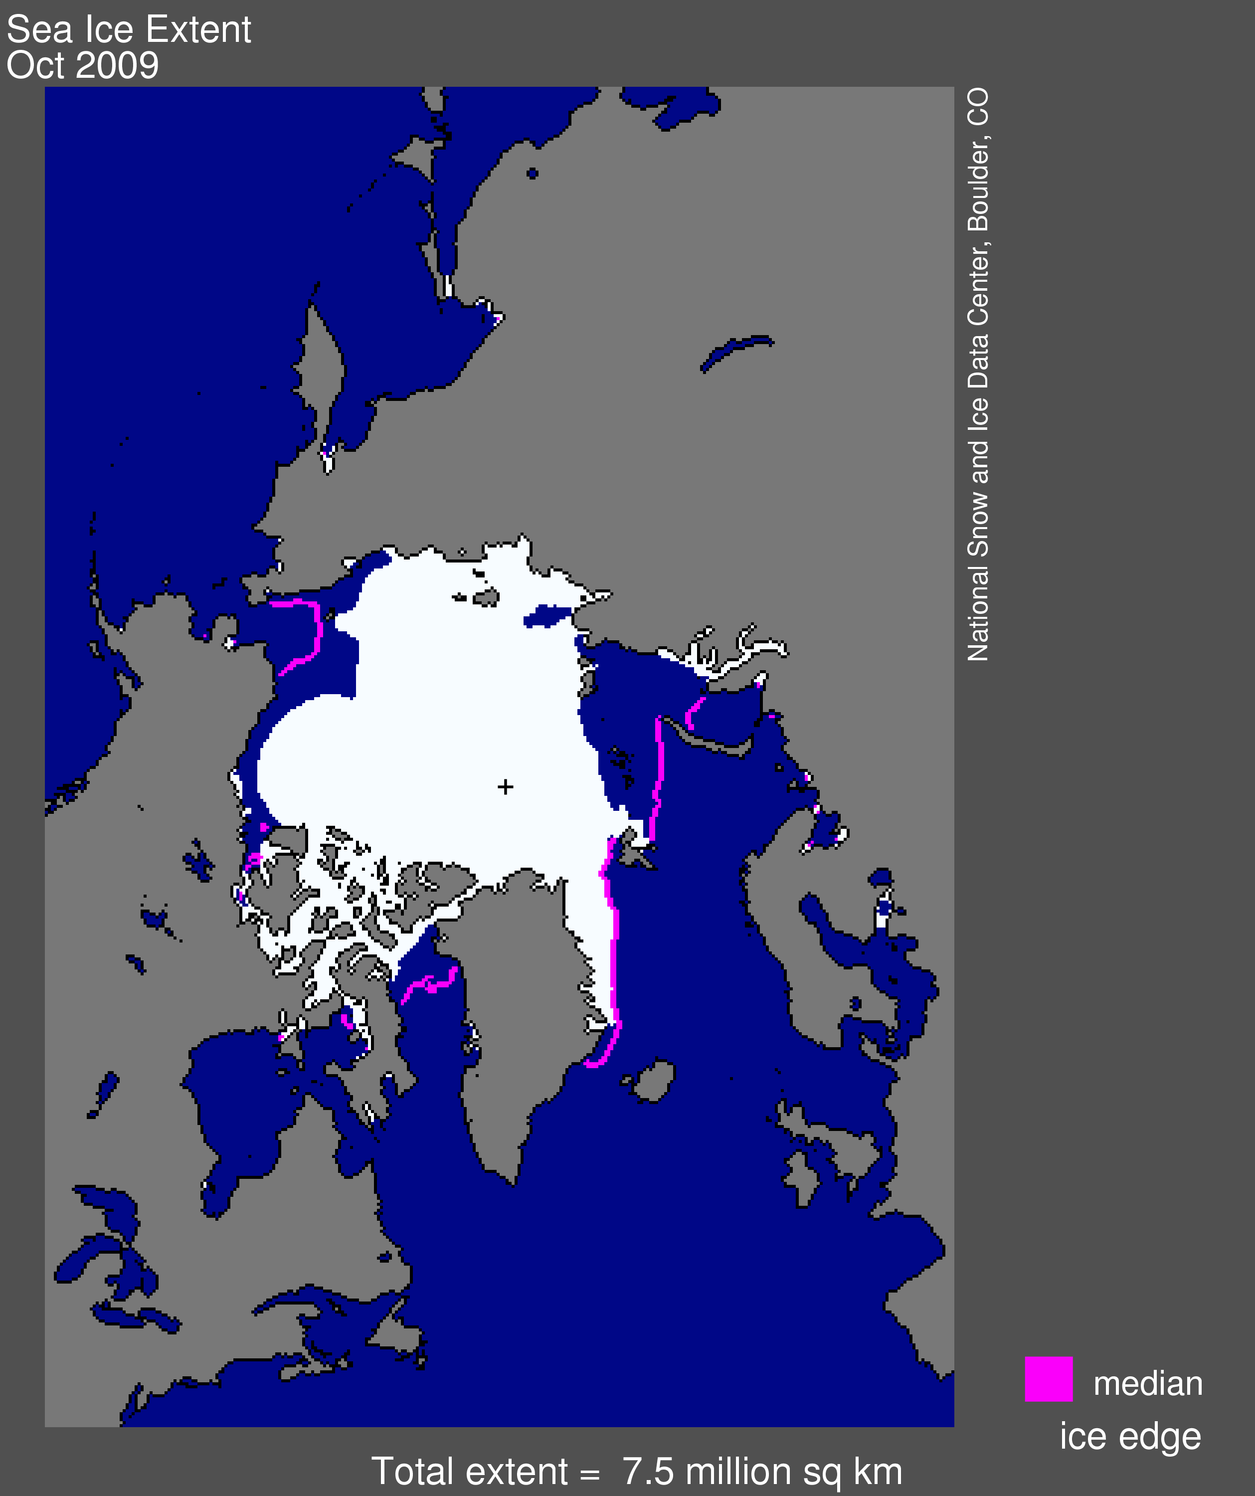 October 2009 arctic ice extent